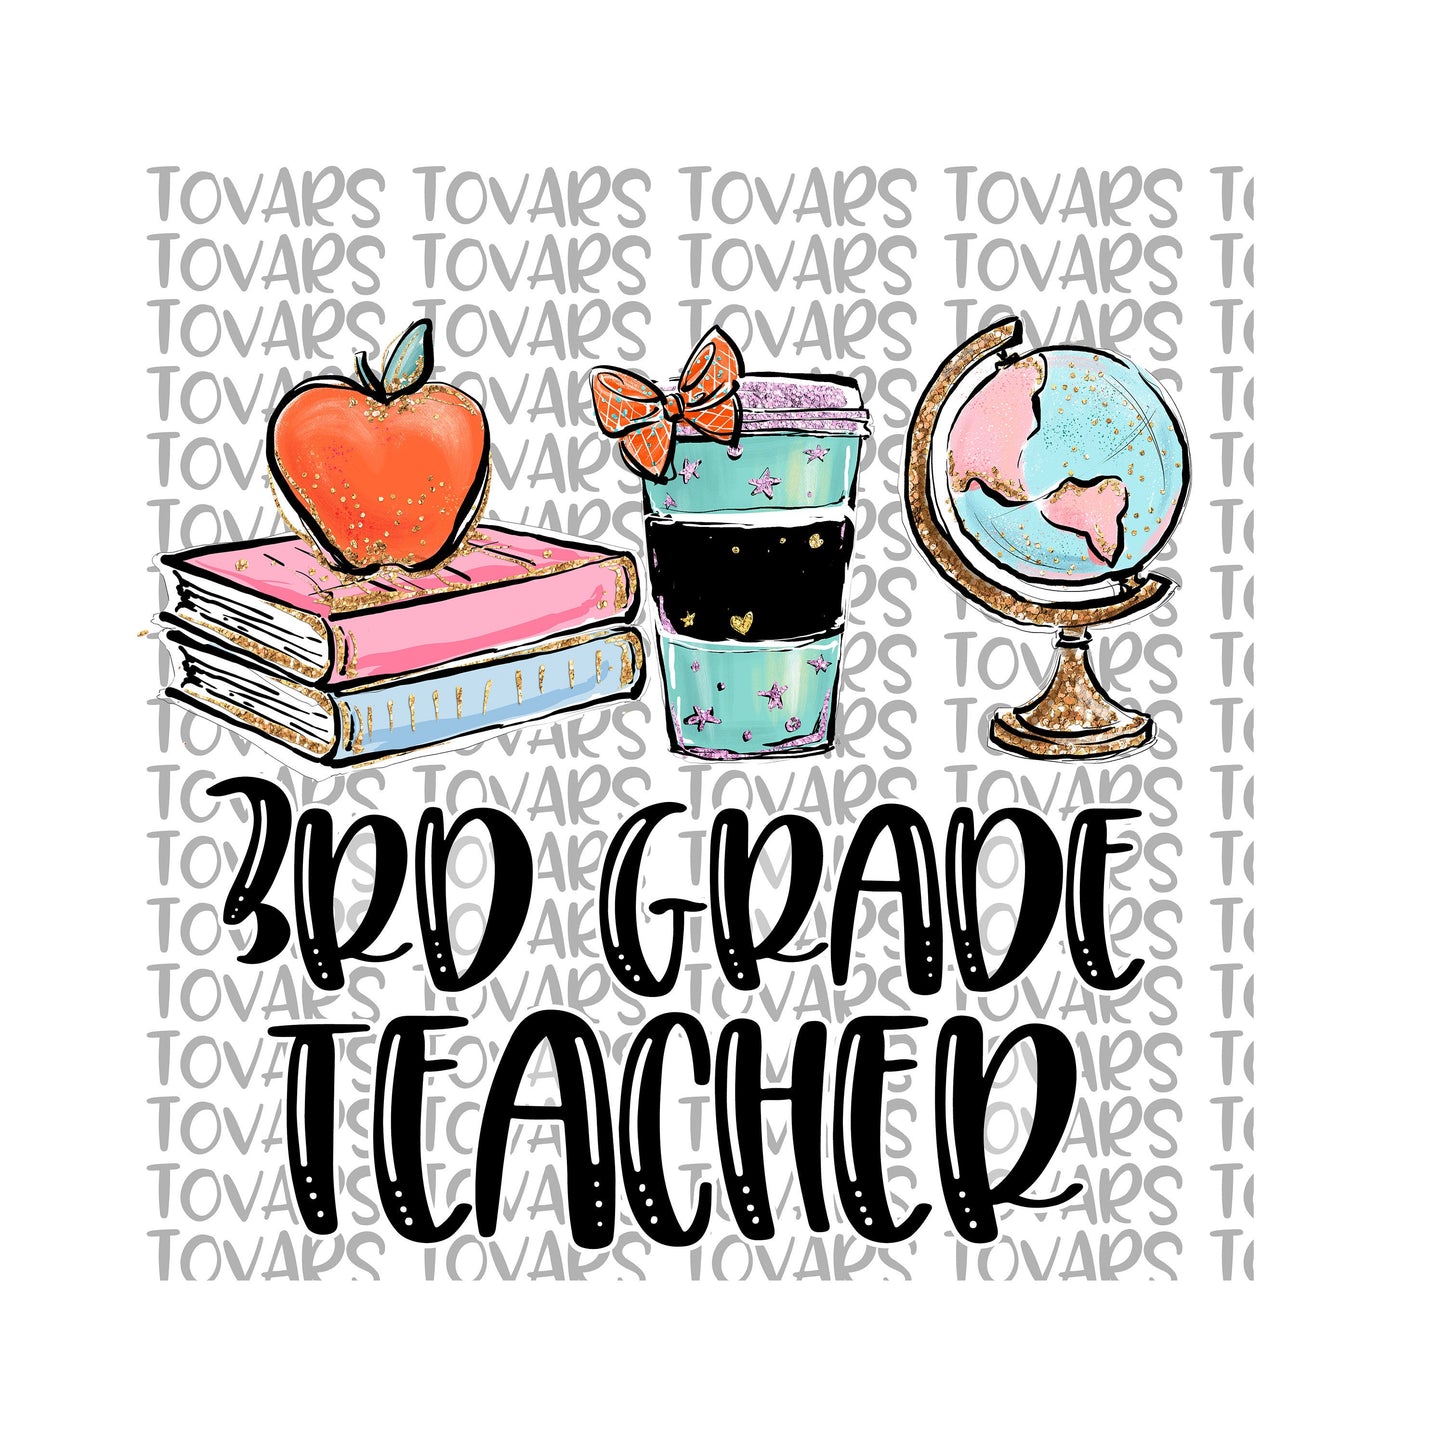 3rd Grade Teacher Sublimation Download, 3rd grade Teacher PNG, Instant Download Sublimation Download, Teacher PNG file, 3rd Grade Teacher